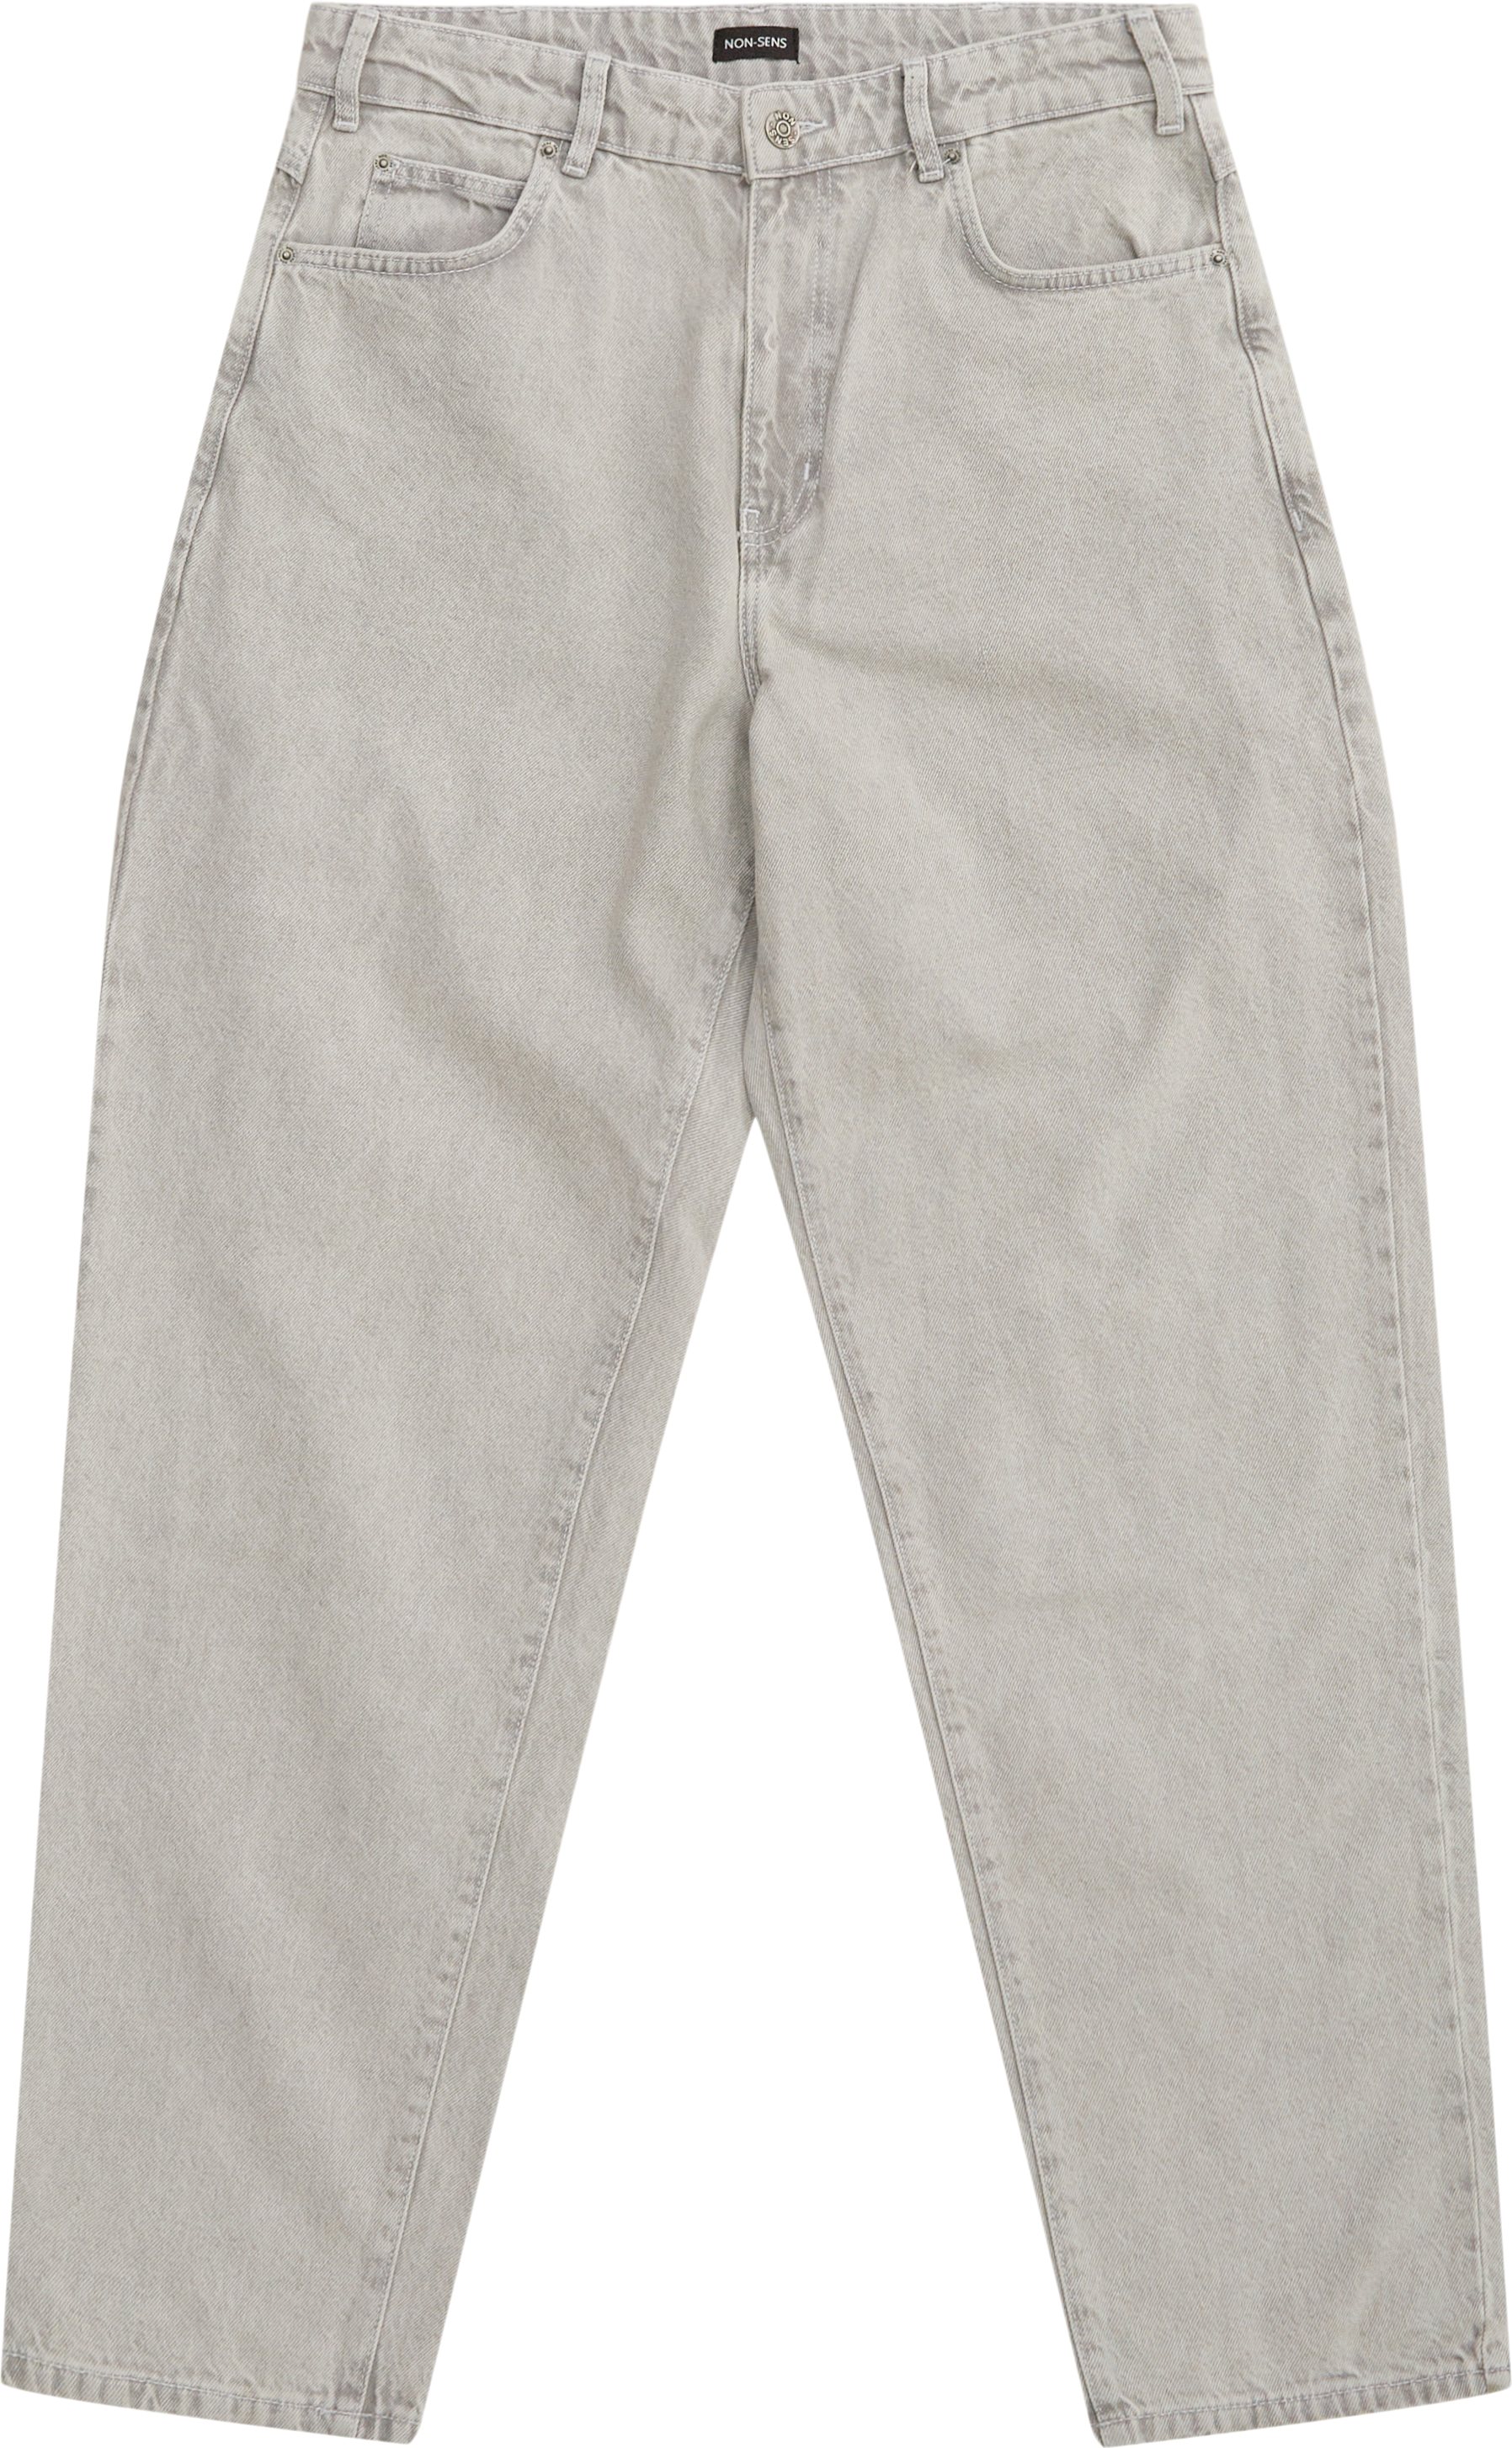 Non-Sens Jeans ALASKA LIGHT GREY Grey